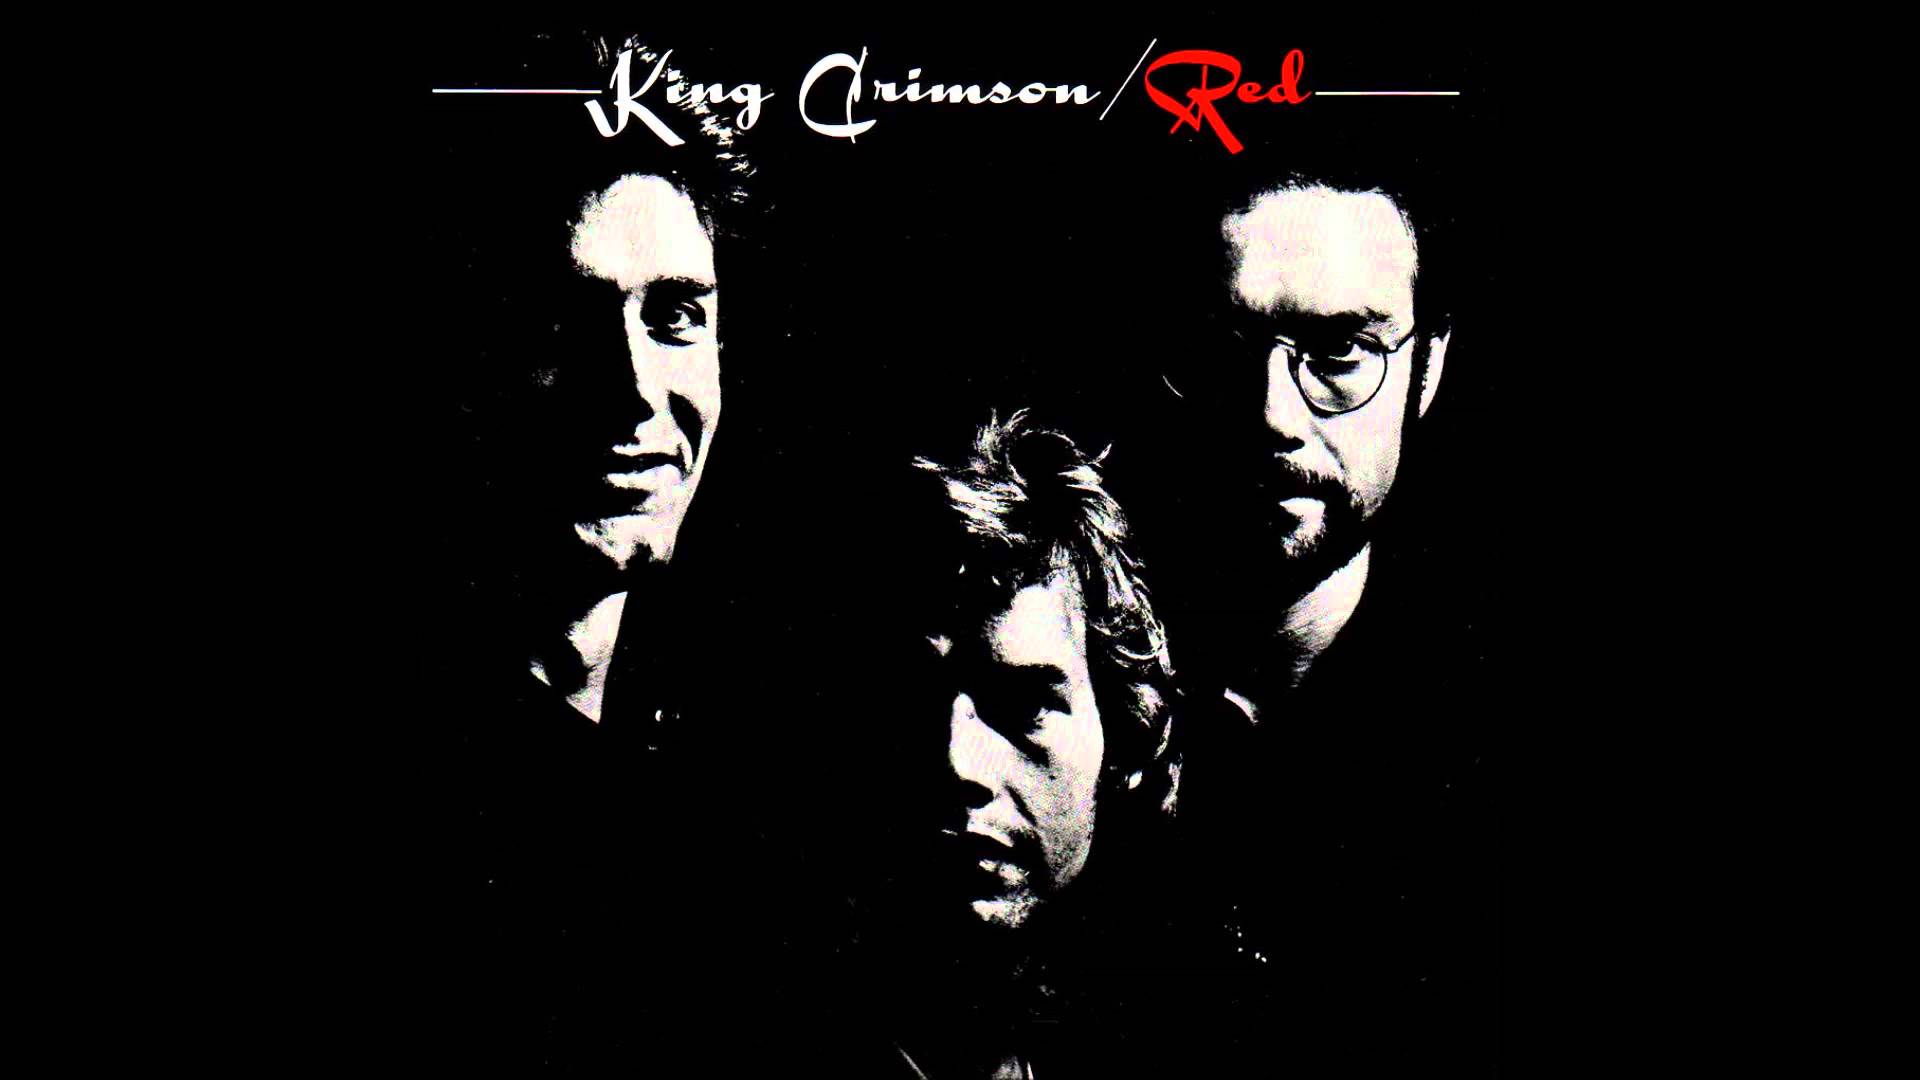 King Crimson - Red (8-bit) - YouTube